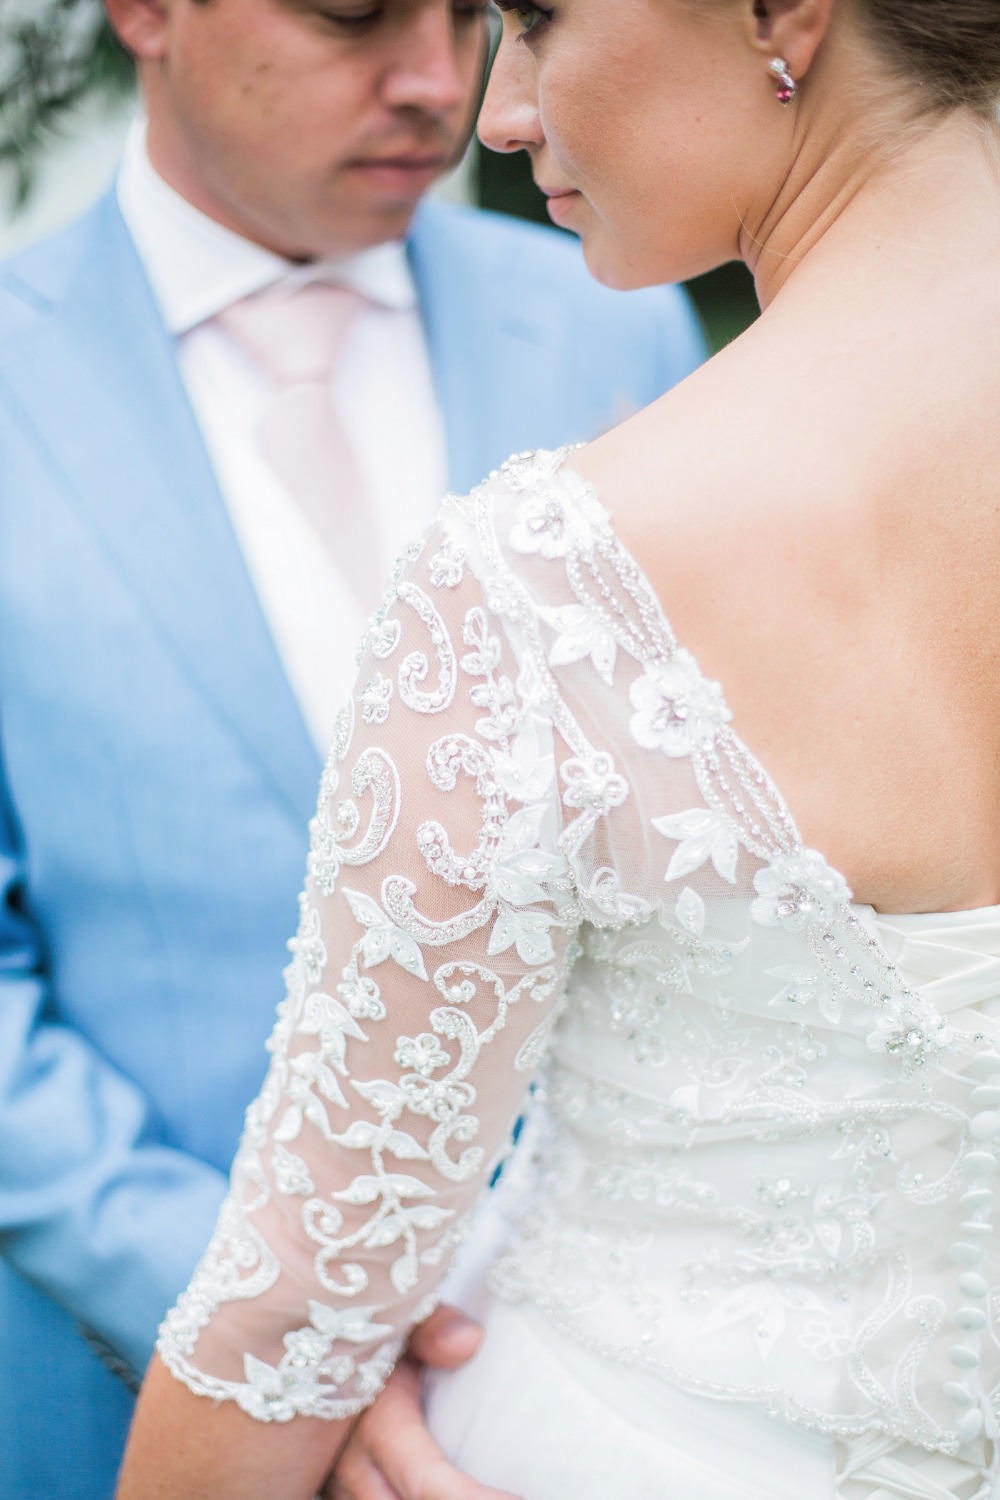 Lace wedding dress detail